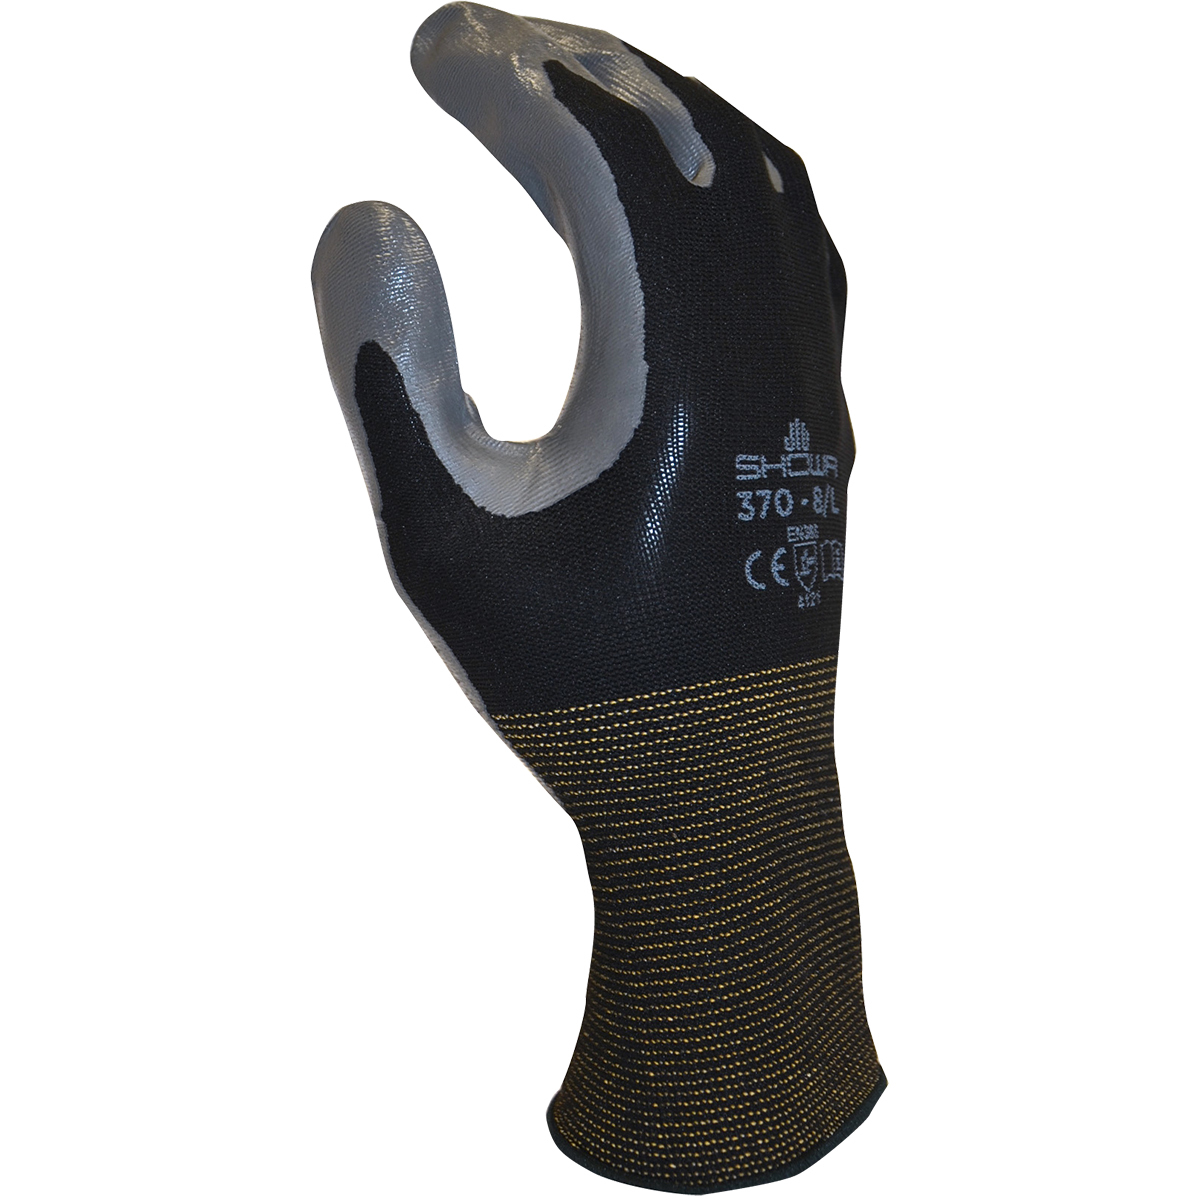 Pack of 12 Pairs Black SHOWA Atlas 370BM-07 Nitrile Palm Coating Glove Medium 